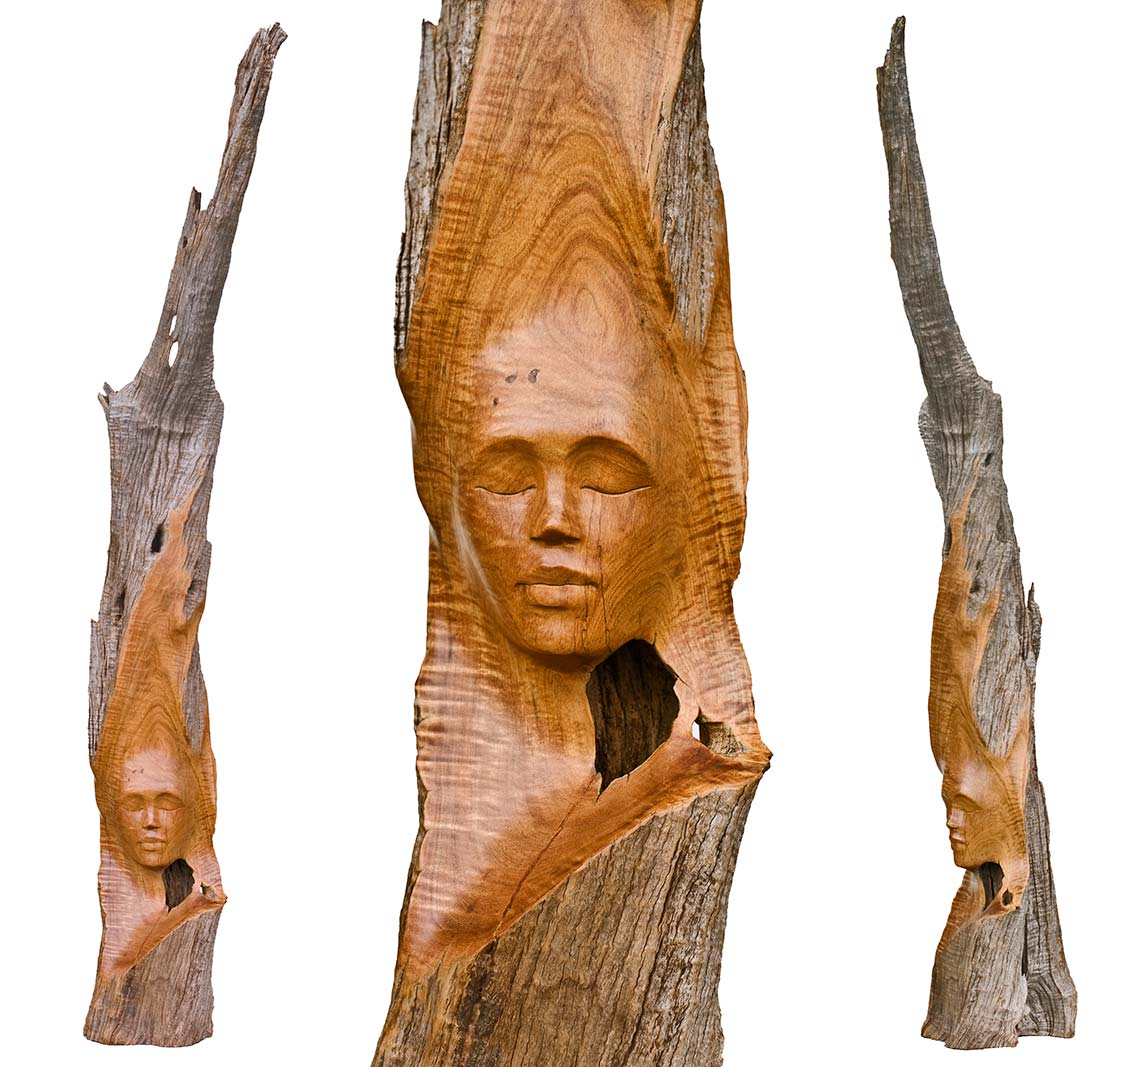 Po'omaika'iHandcarved Wood Sculpture by Dale Zarrella